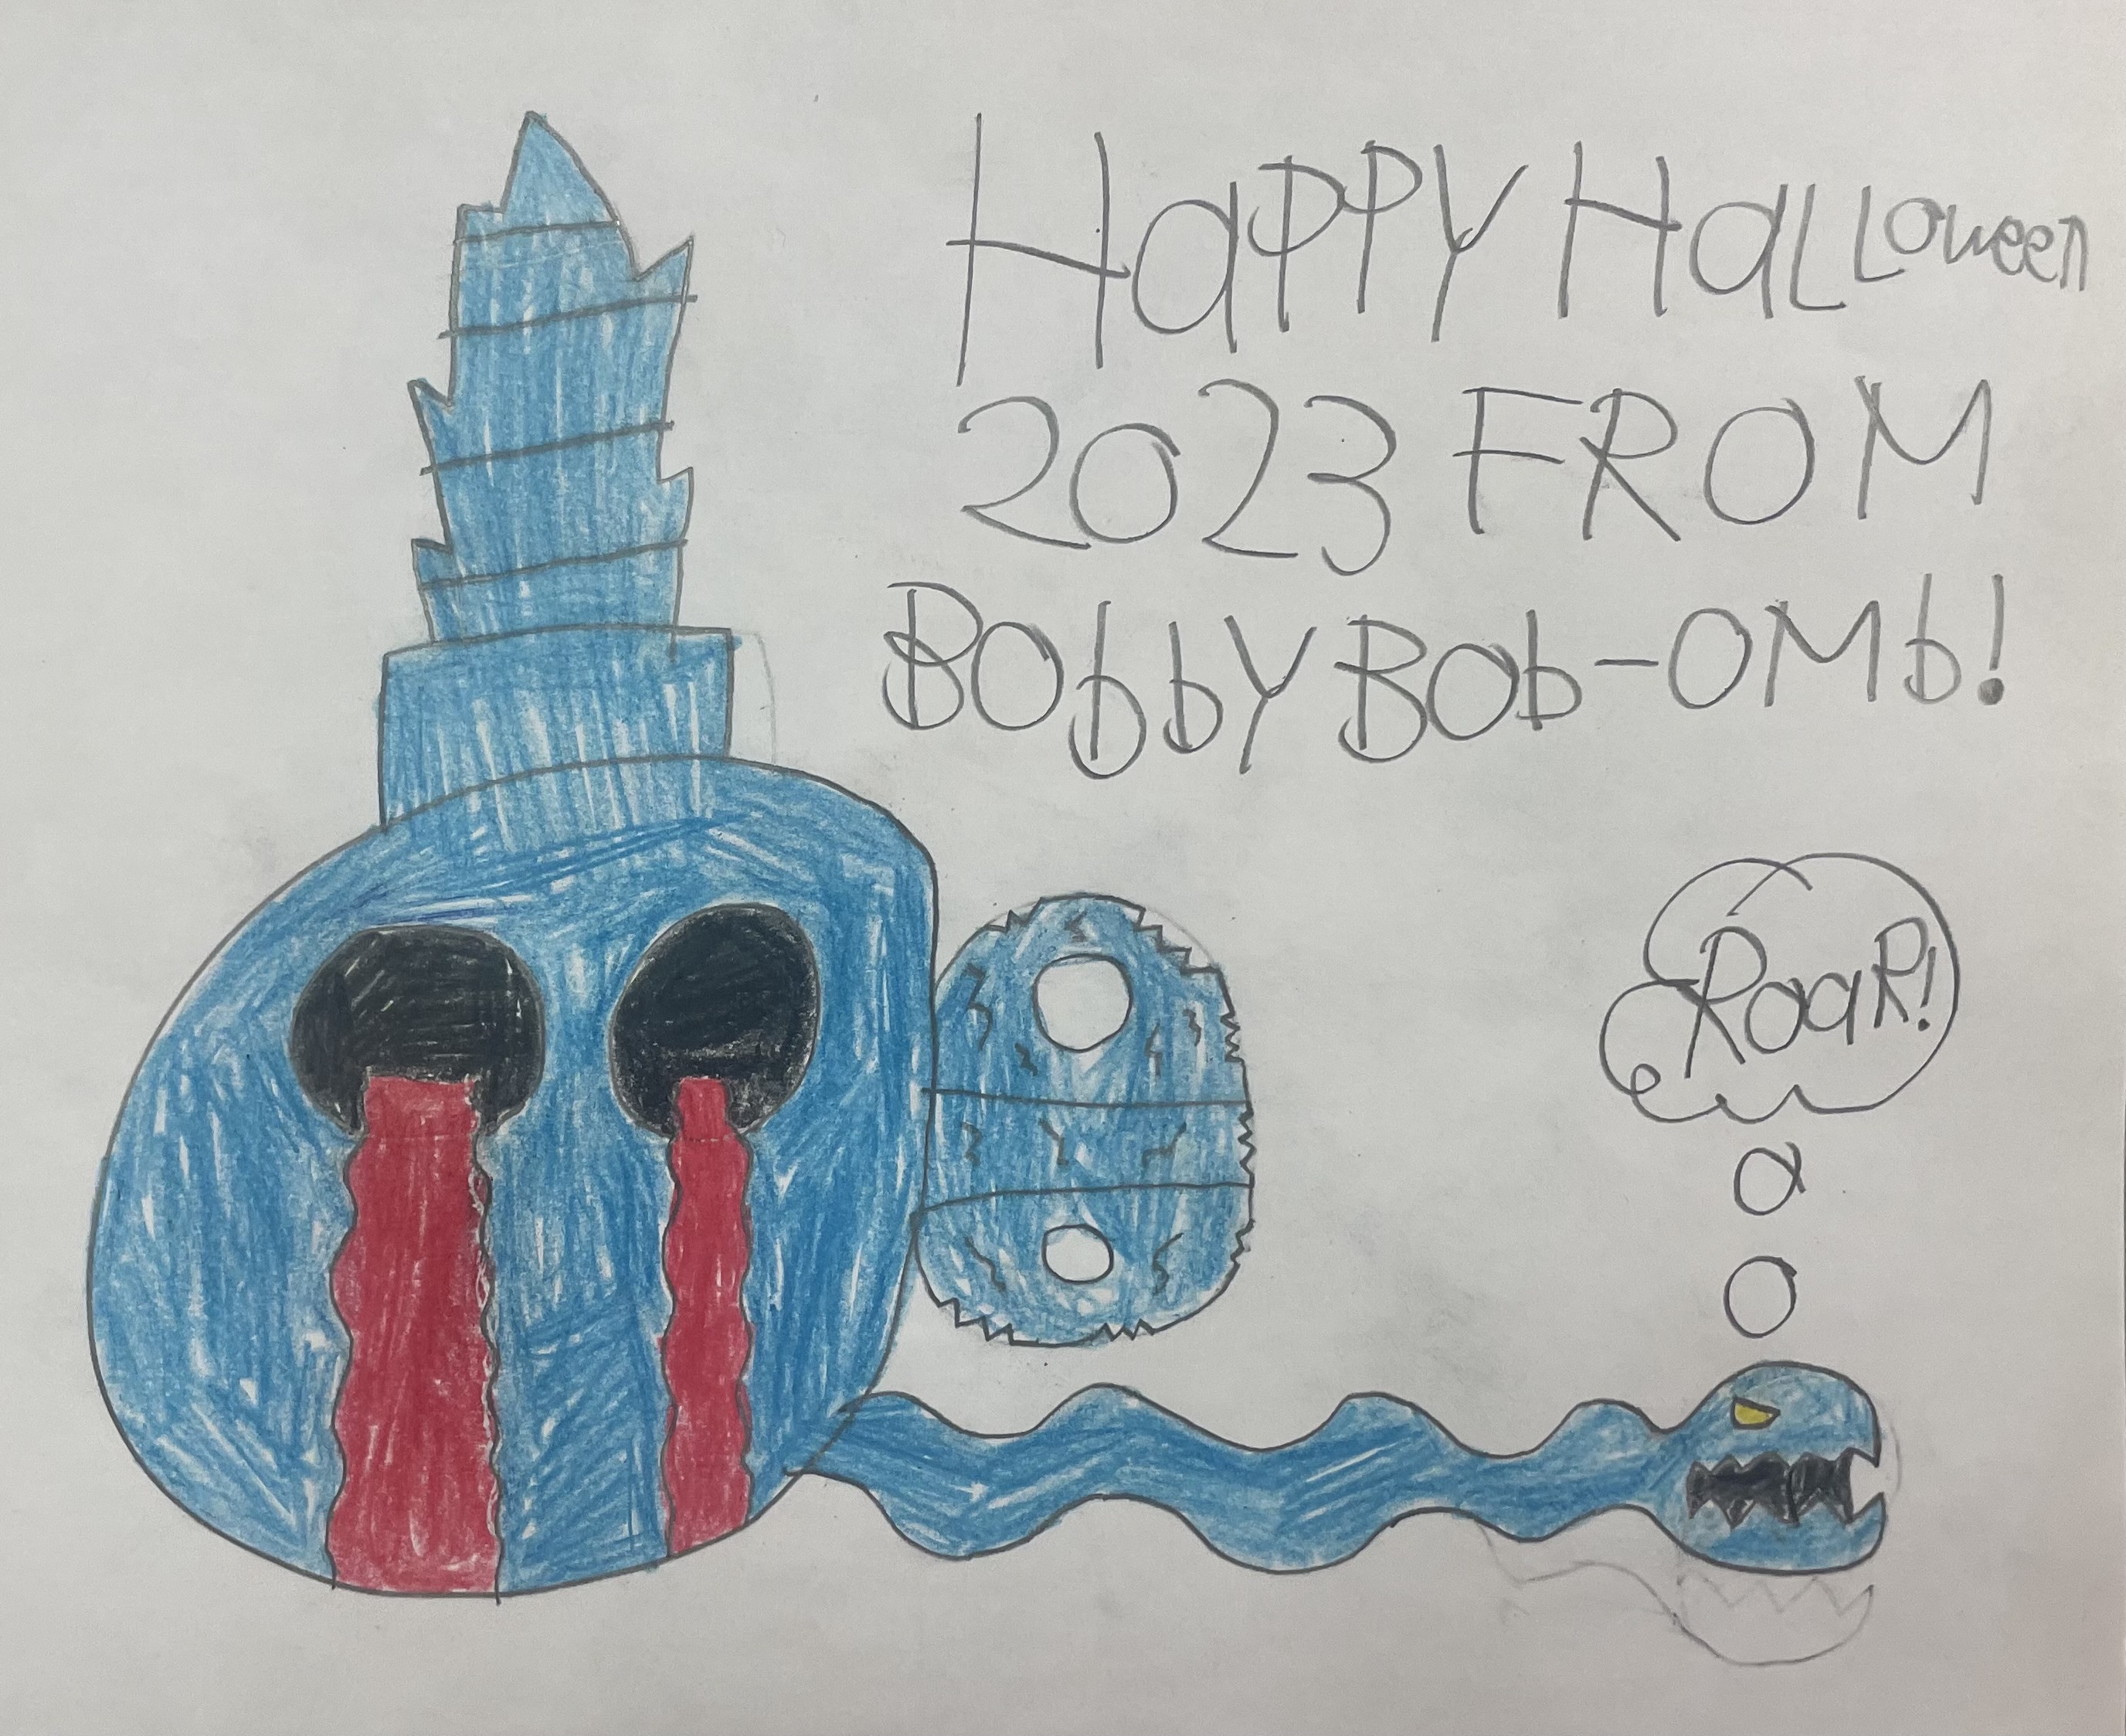 Happy Early Halloween 2023 From Bobby Bob-Omb by MichaelAR123 on DeviantArt